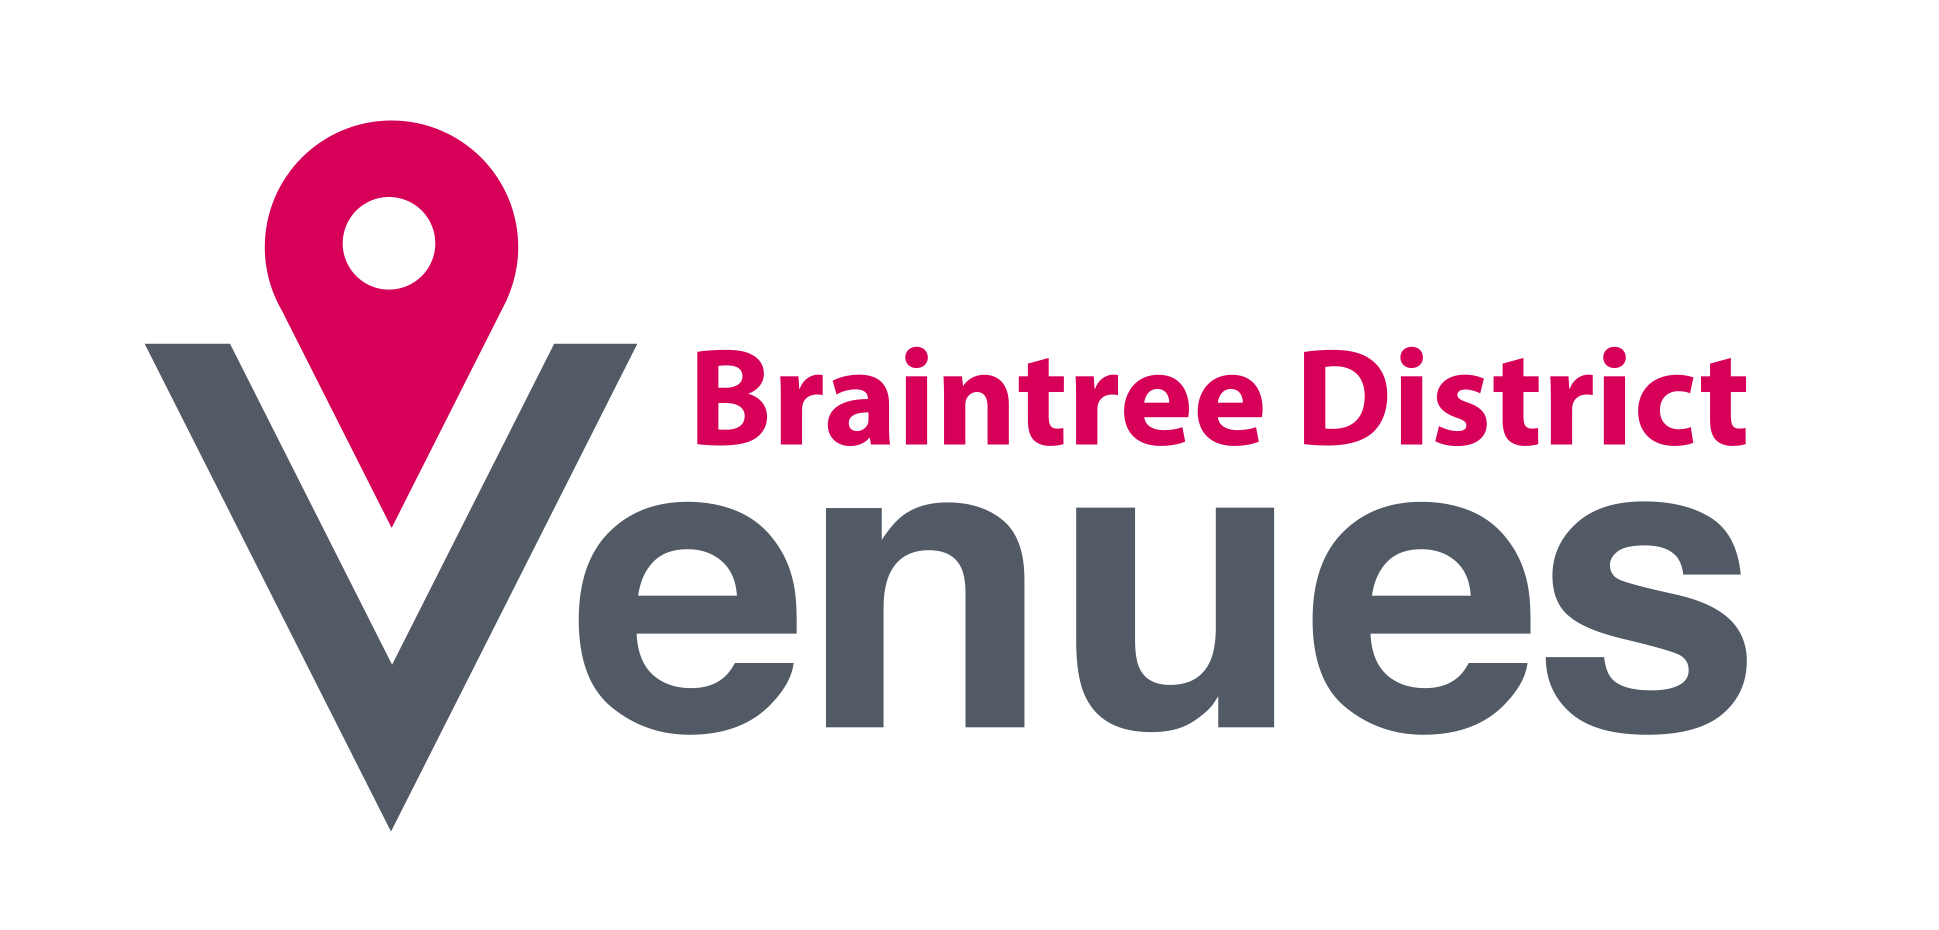 Braintree District venues logo
